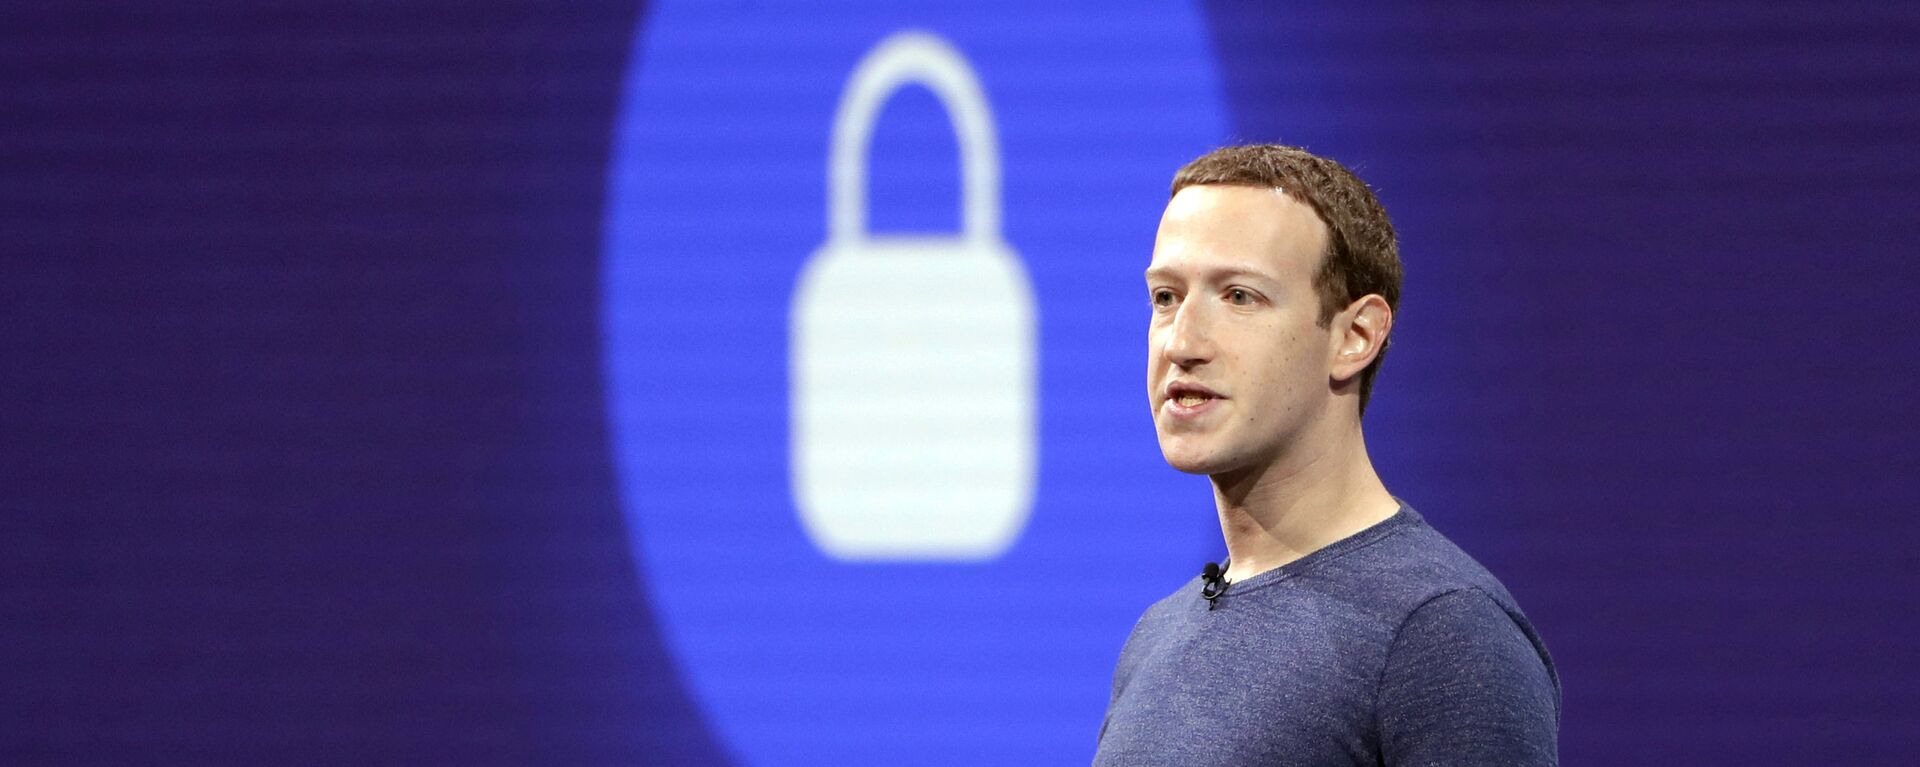 Mark Zuckerberg, fundador de Facebook (archivo) - Sputnik Mundo, 1920, 08.04.2021